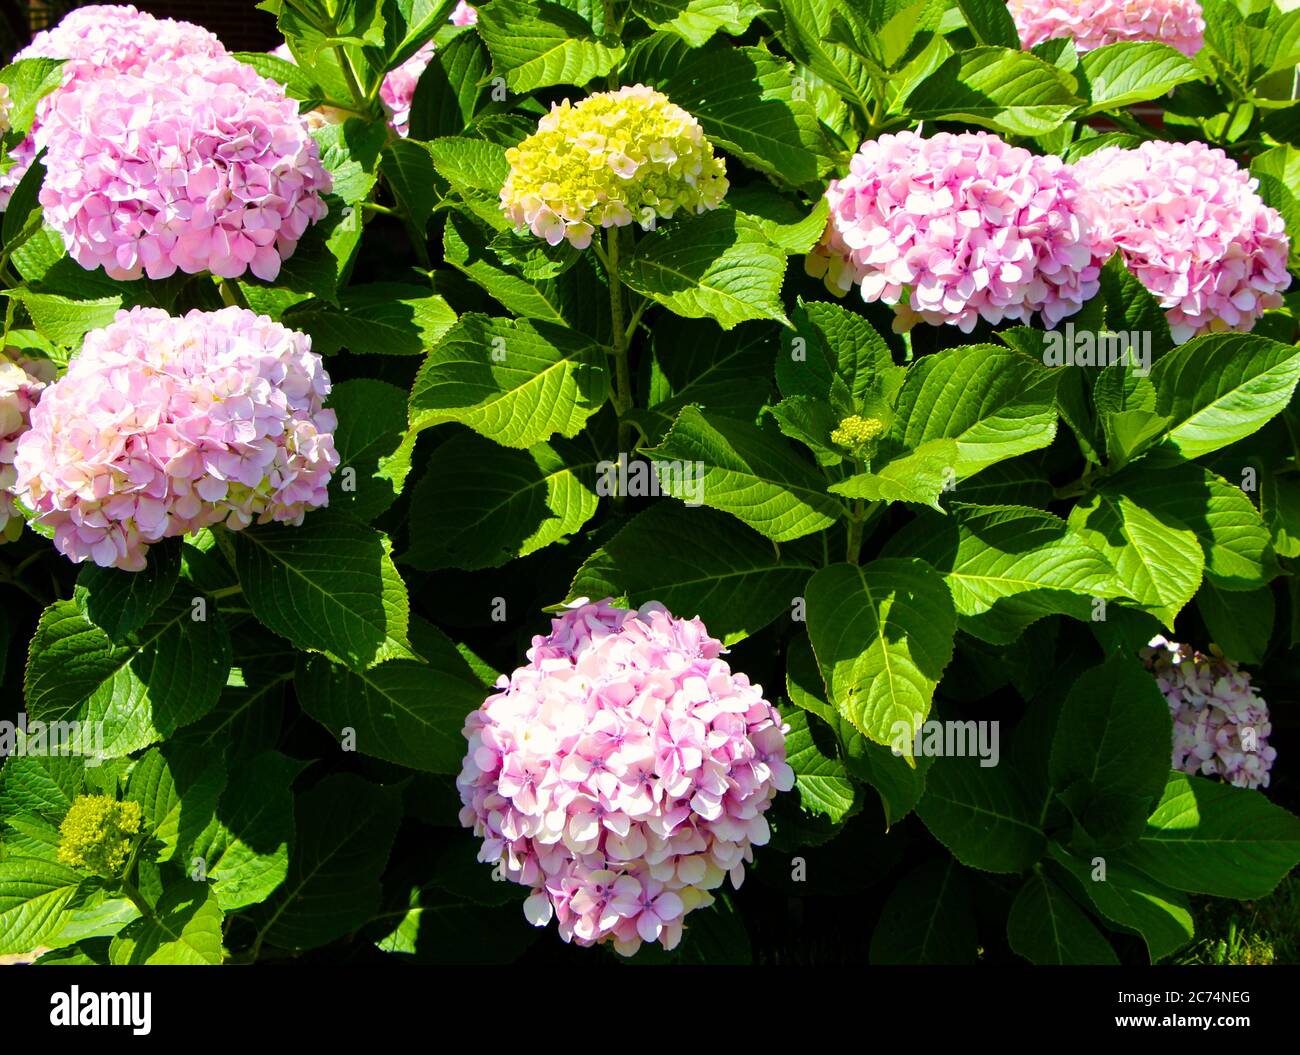 Rosa Hortensien macrophylla oder MOPHEAD Hortensien Blüten Stockfoto